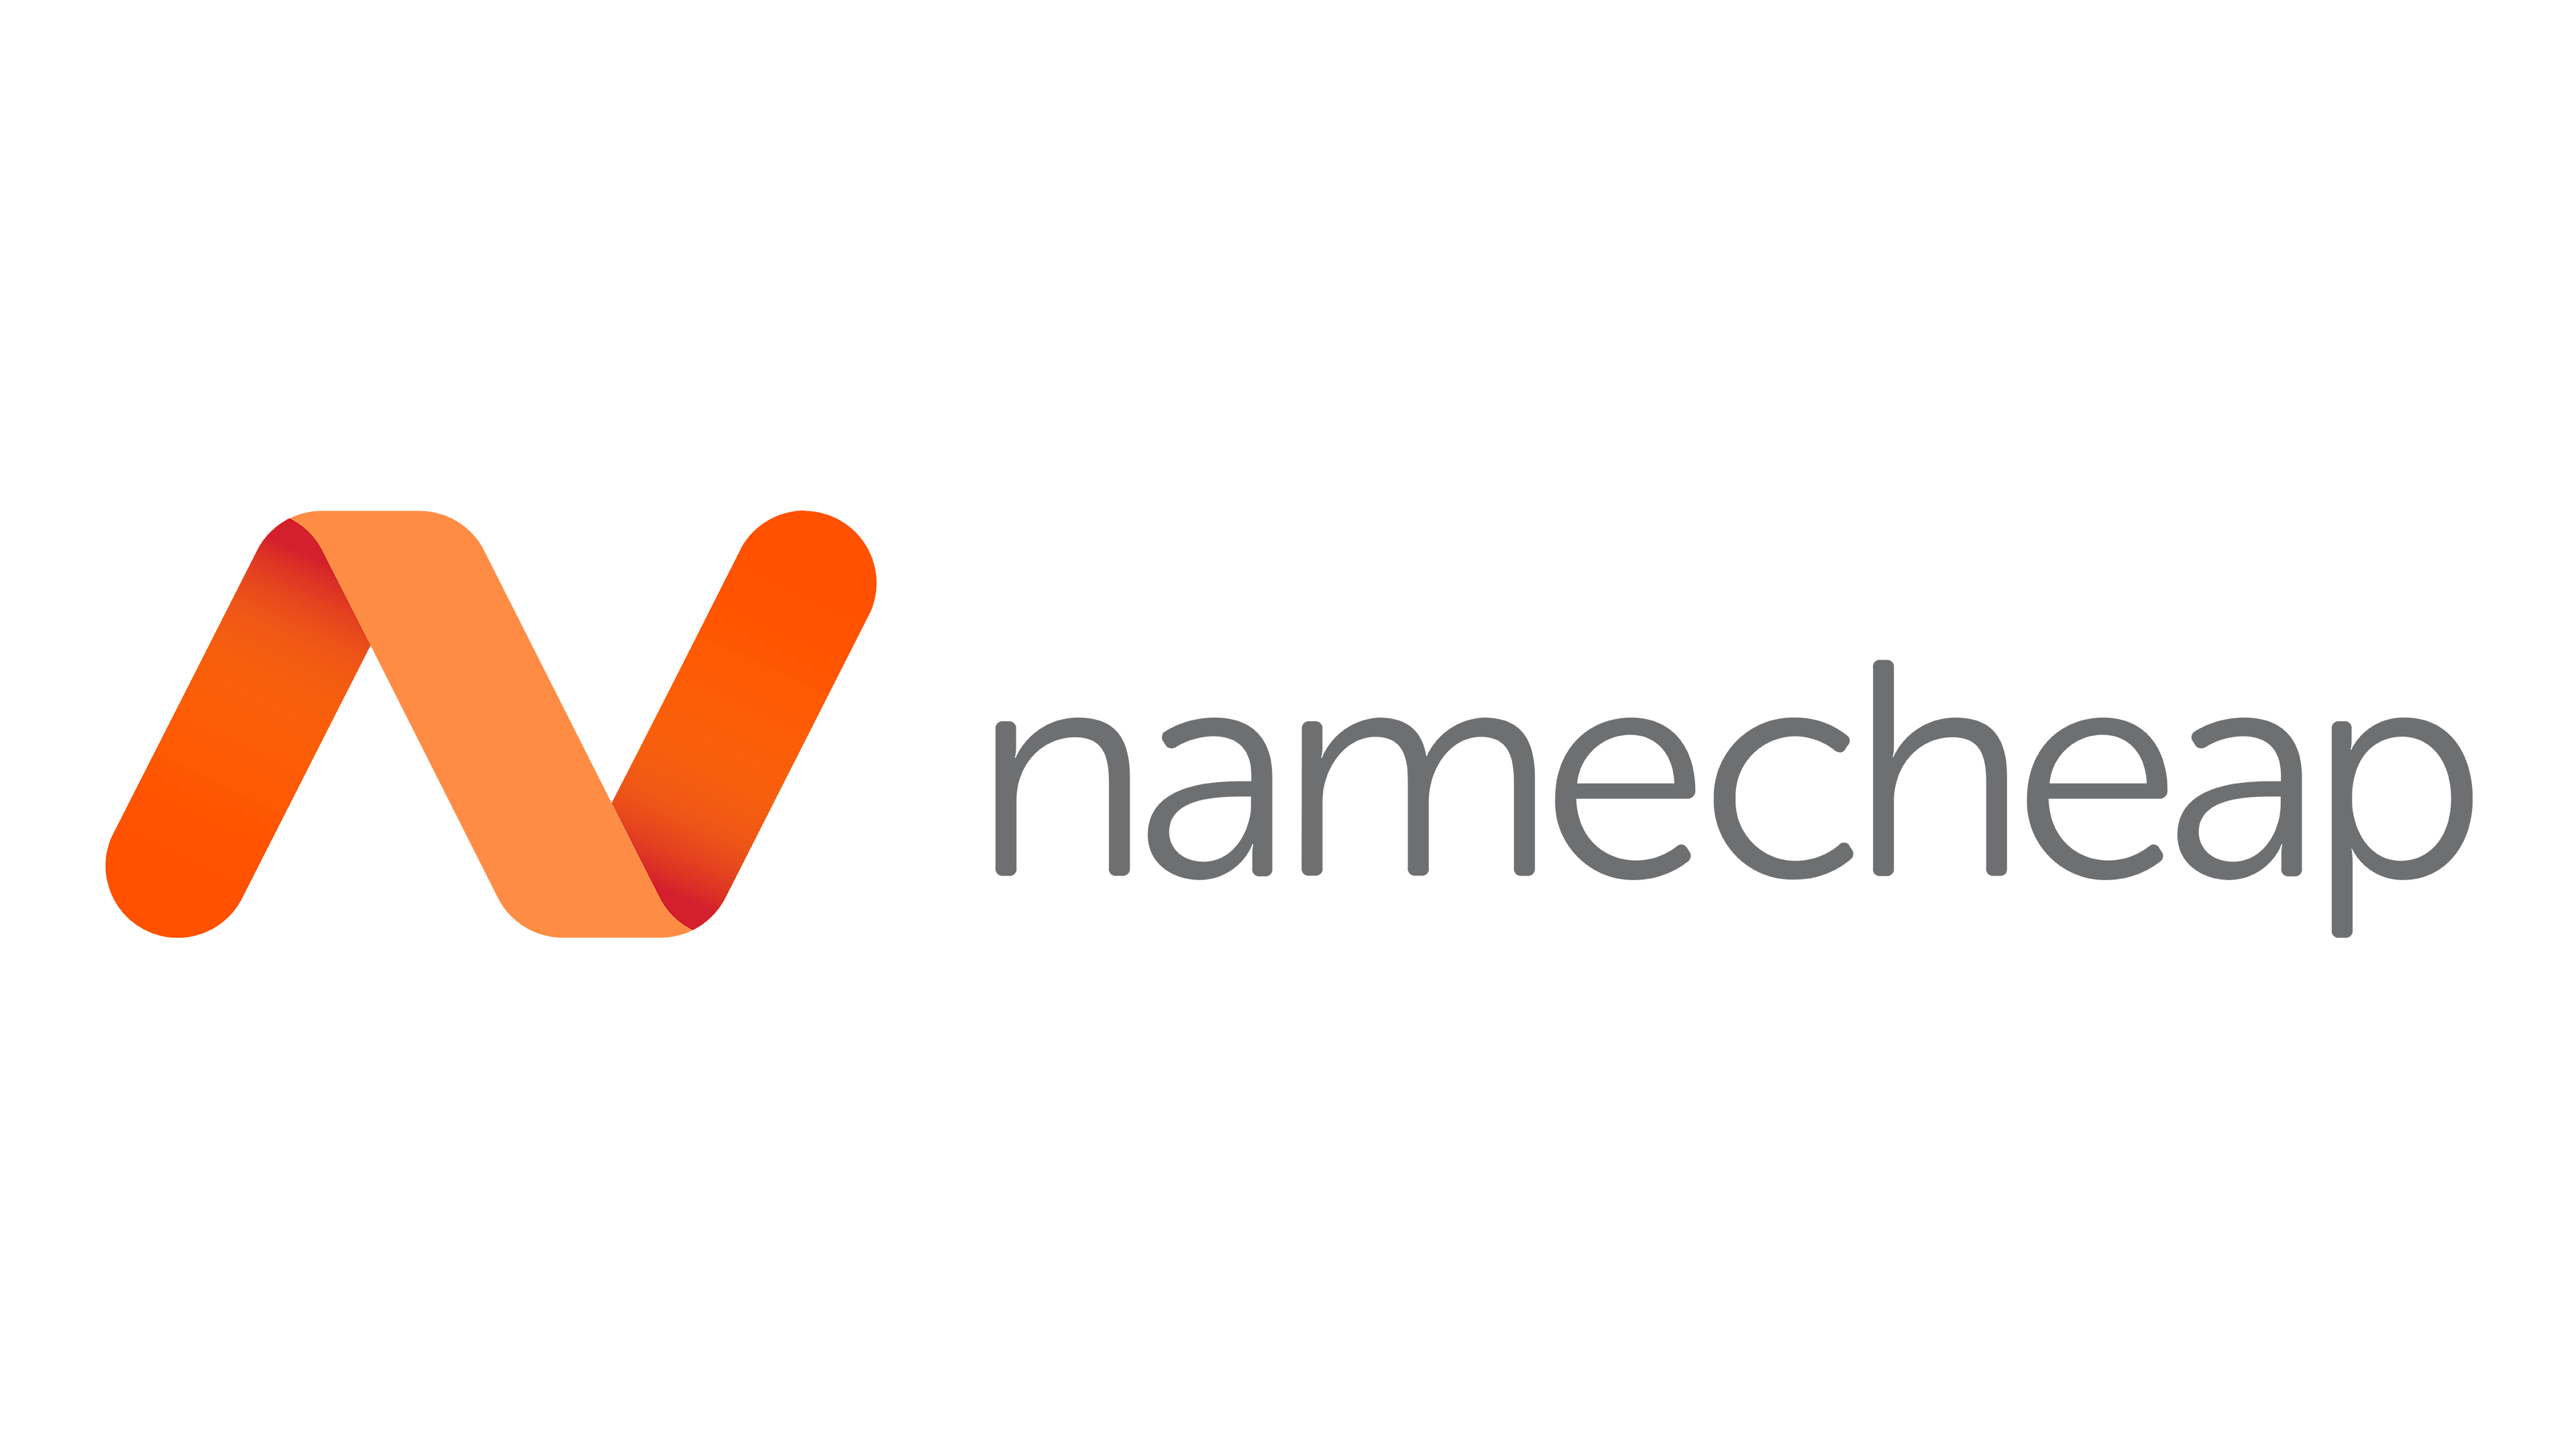 How to Register Domain name on Namecheap